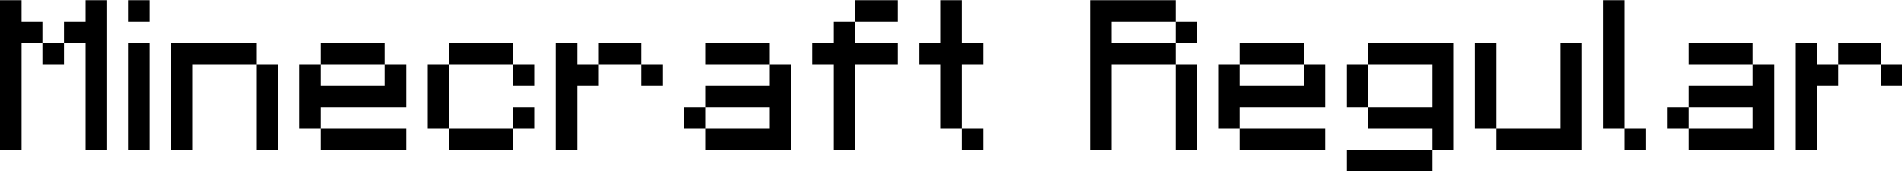 Minecraft Logo Black And White